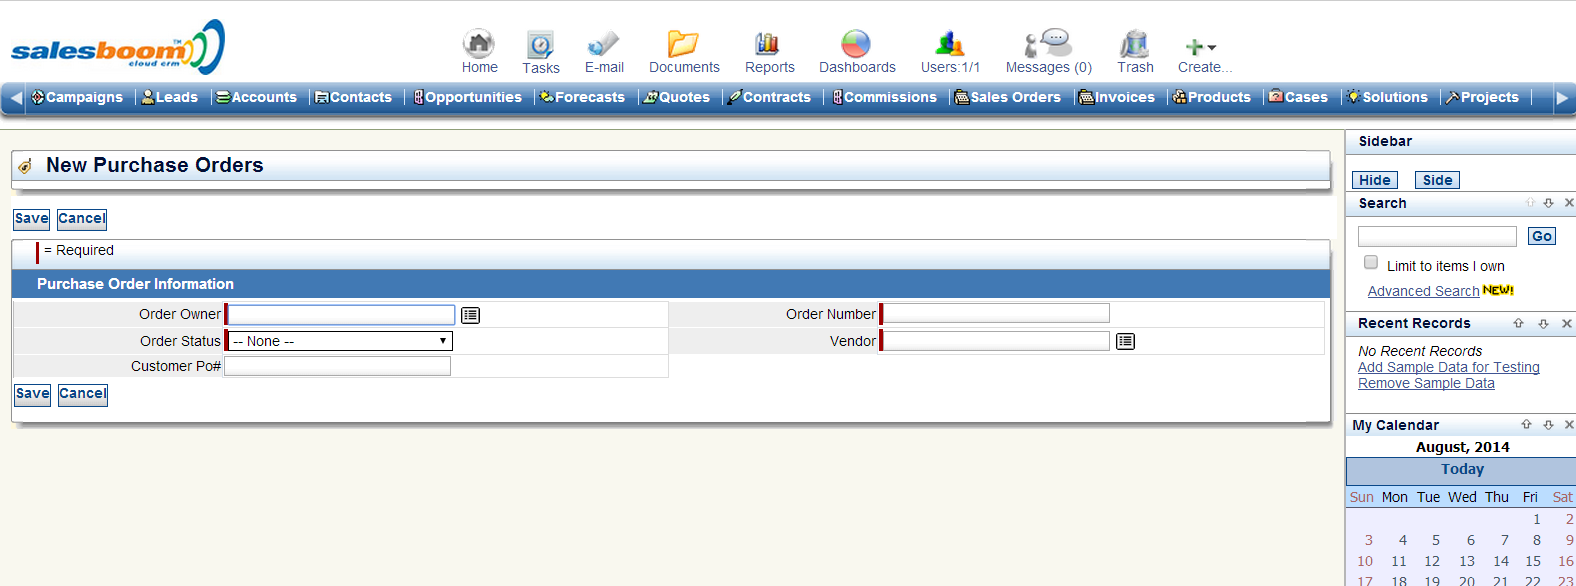 crm-purchase-order-screenshot | Salesboom cloud CRM